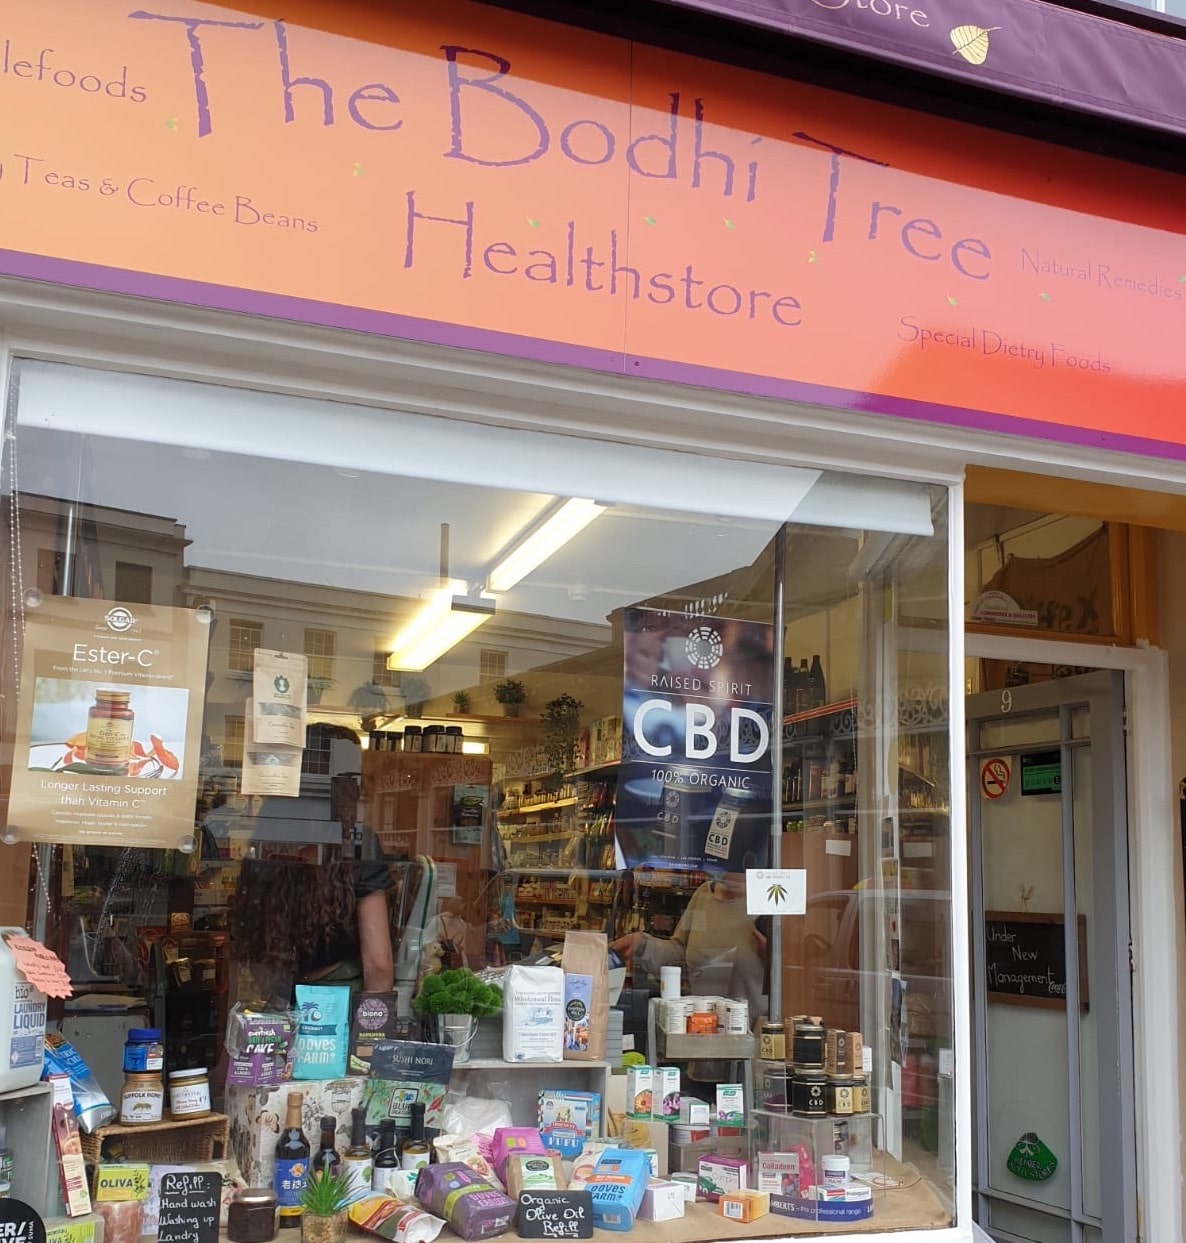 The Bodhi Tree Healthstore